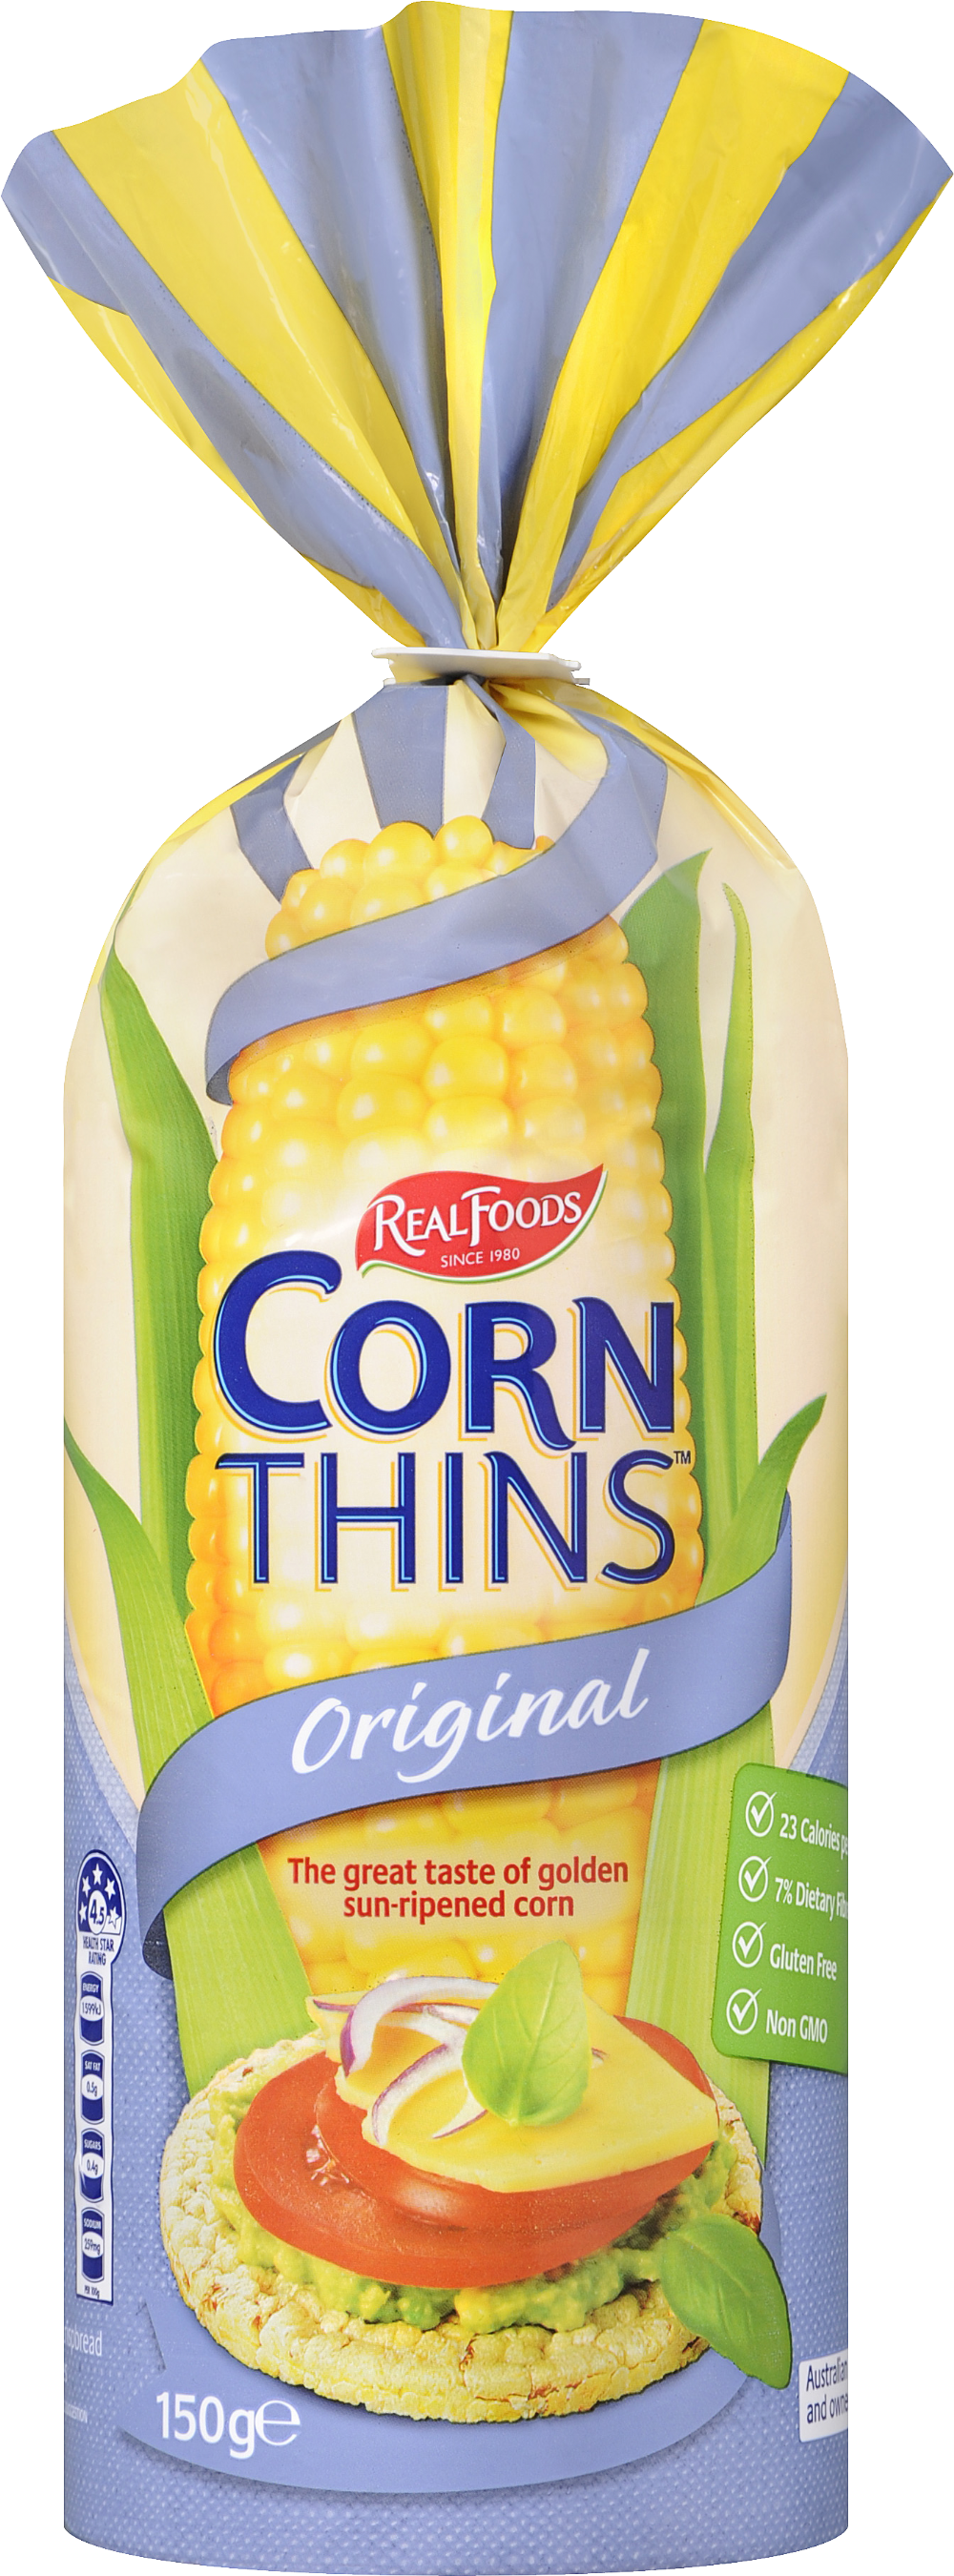 REAL FOODS Corn Thins - Original 150g